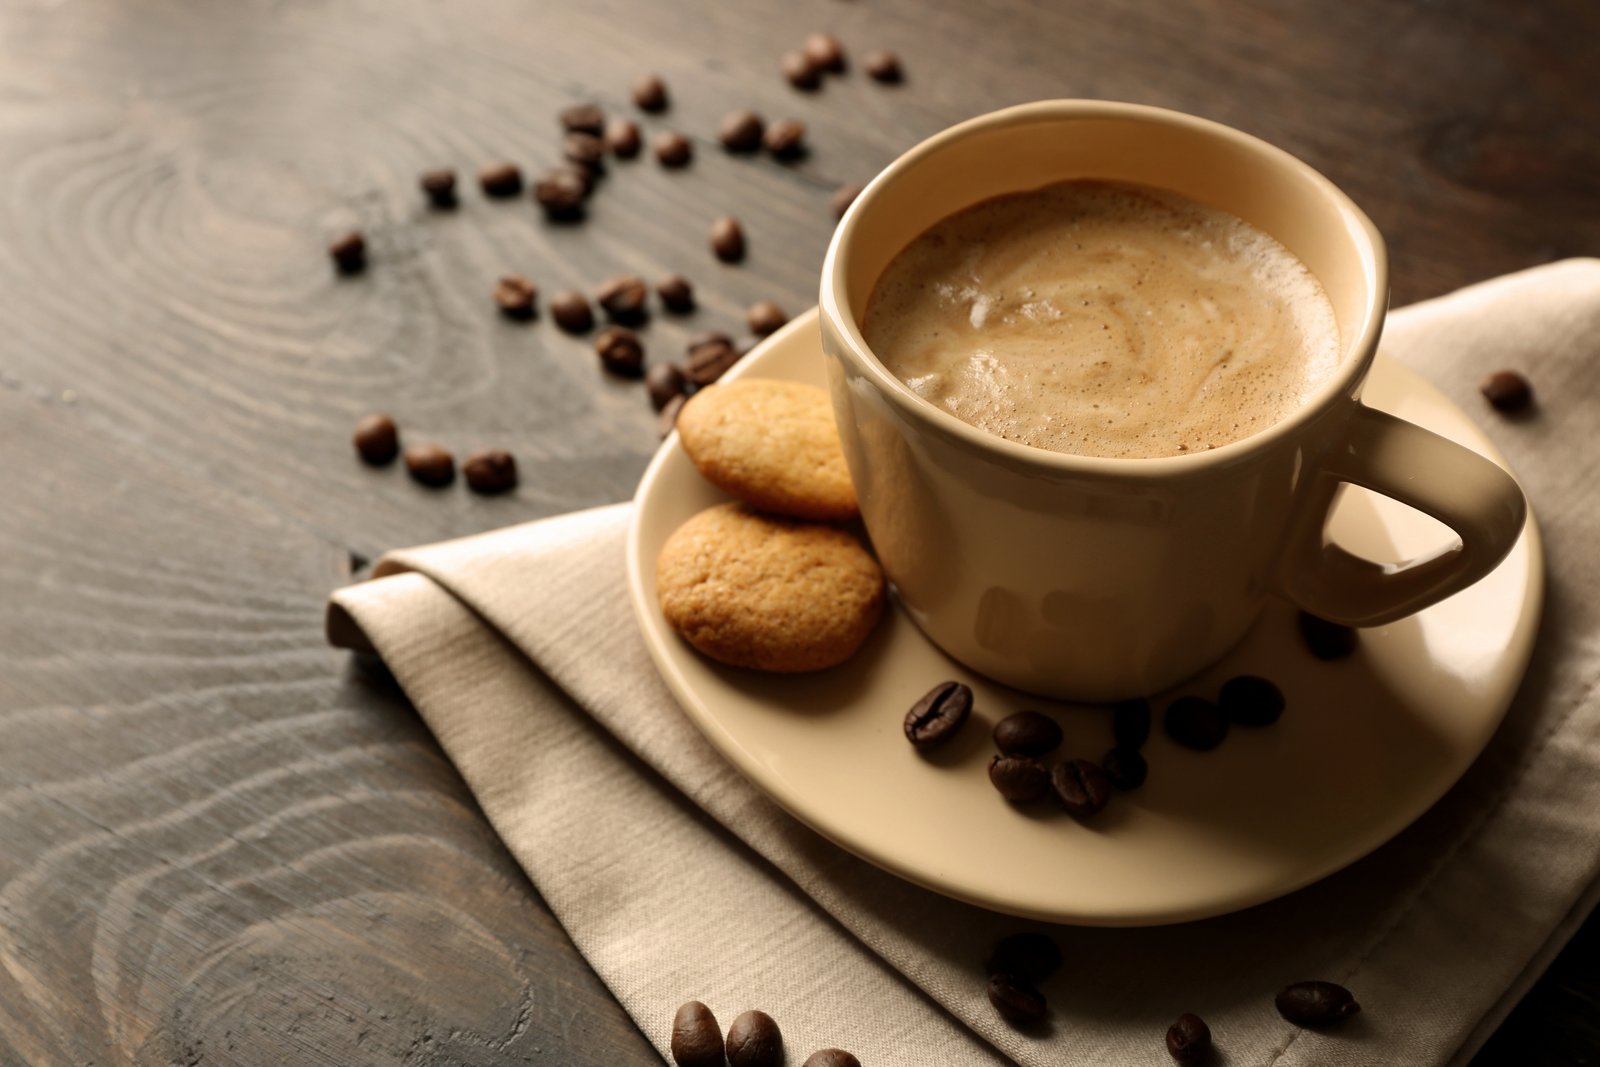 Vegan coffee recipe with soy milk or almond milk